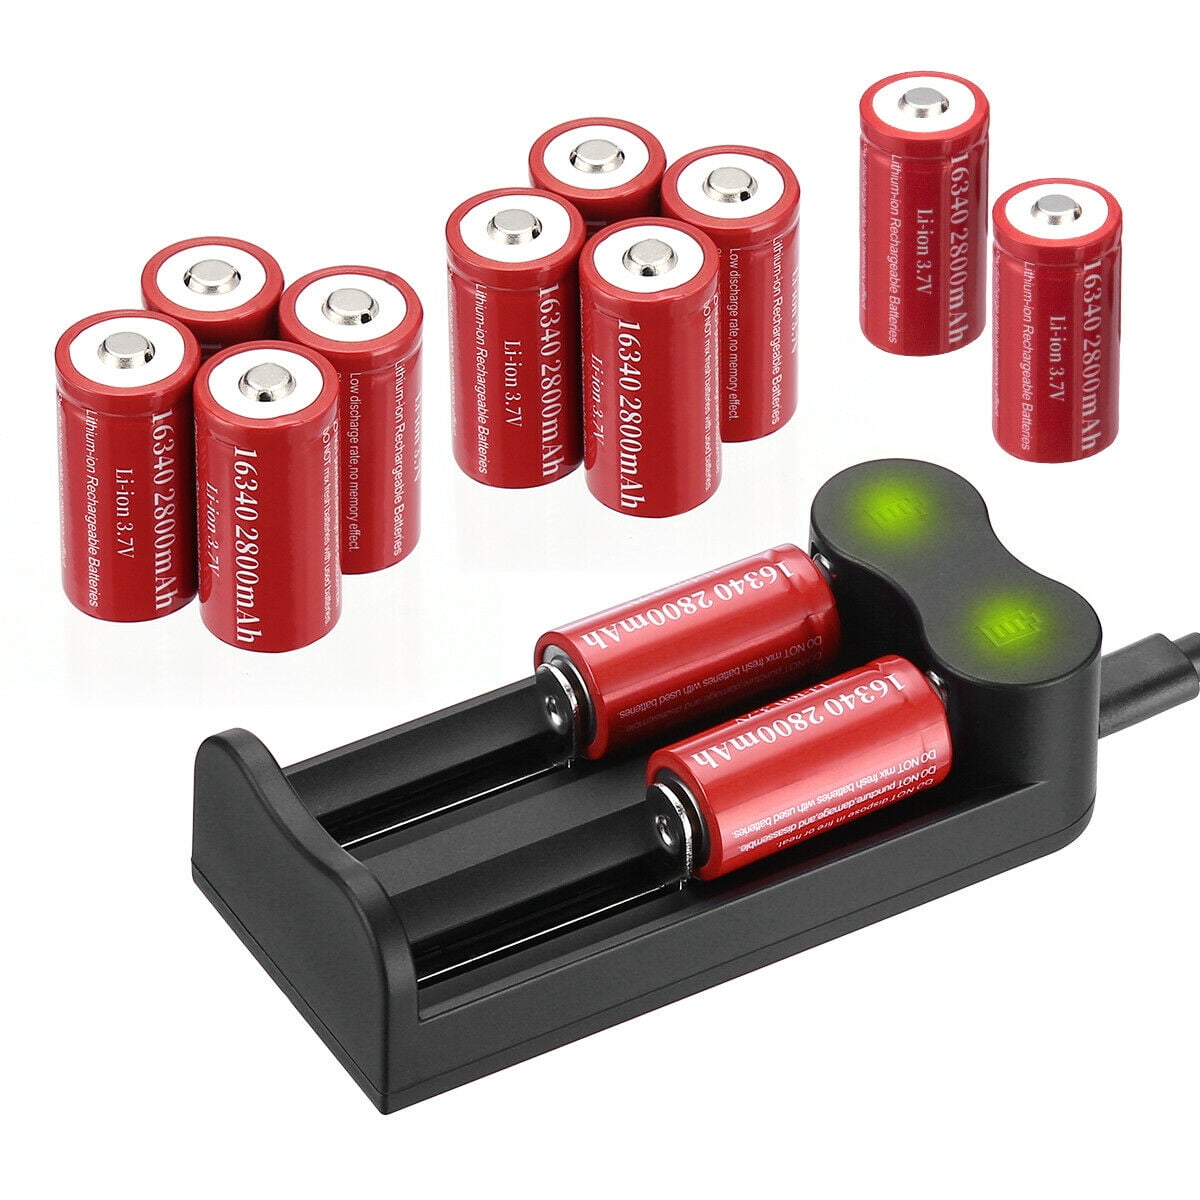 Exell 3V 1700mAh Highest Capacity CR123A Lithium Battery